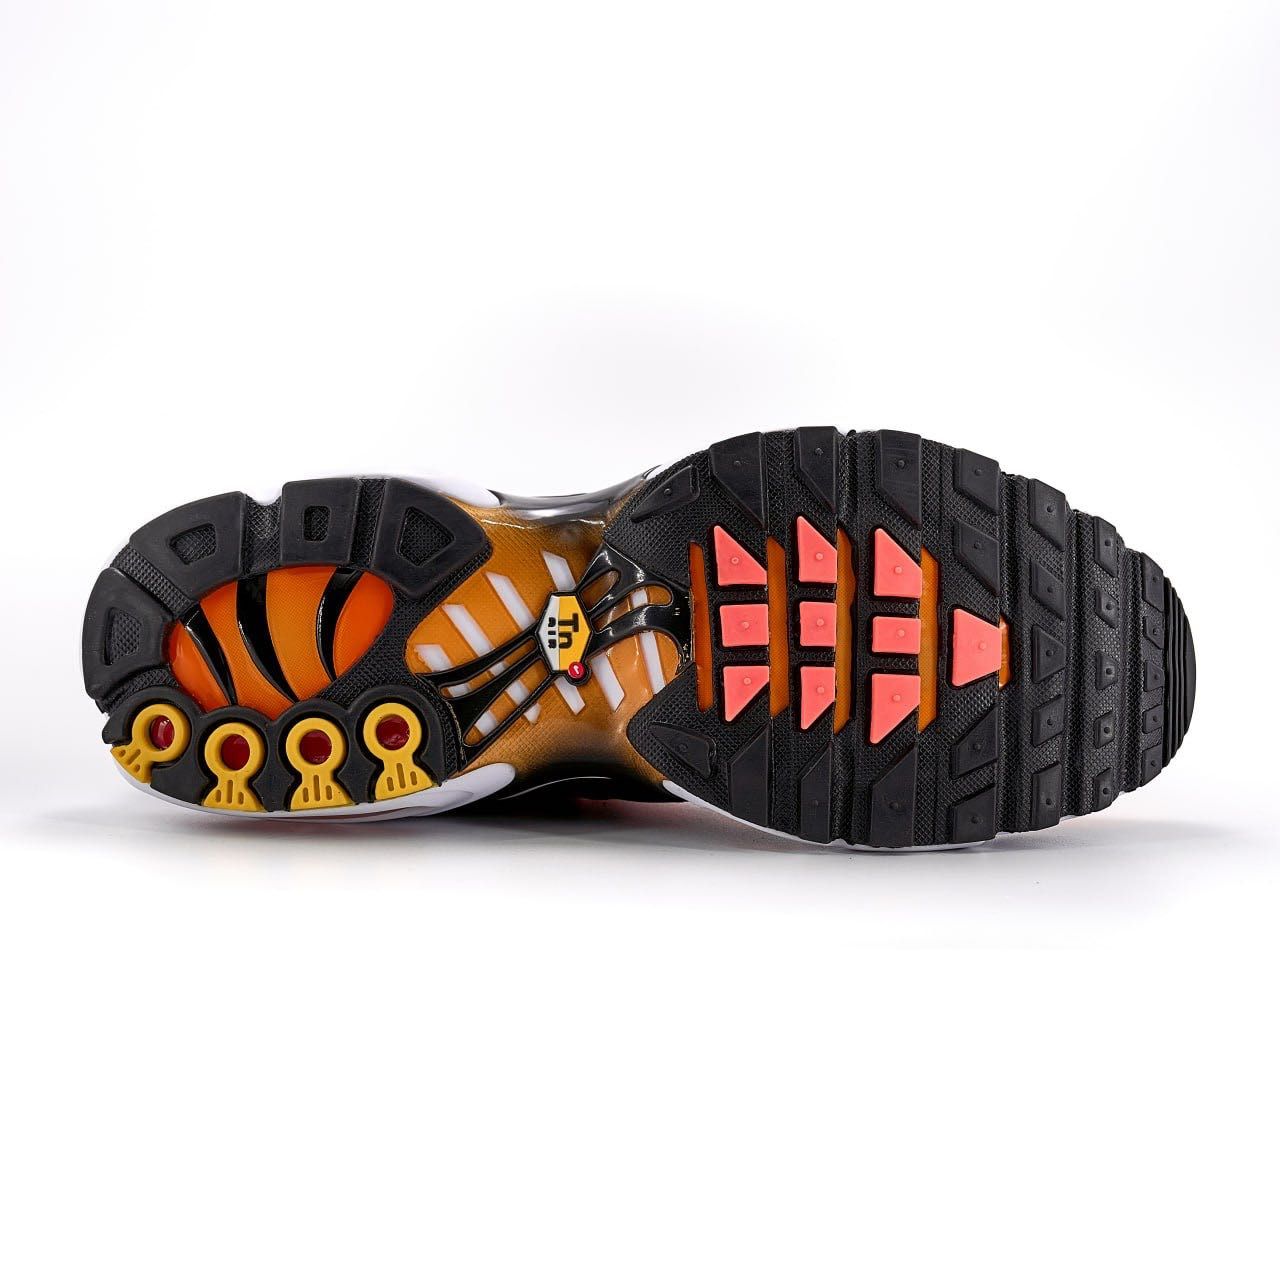 Мужские кроссовки Nike Air Max TN Plus Black/Orange. Размеры 40-45